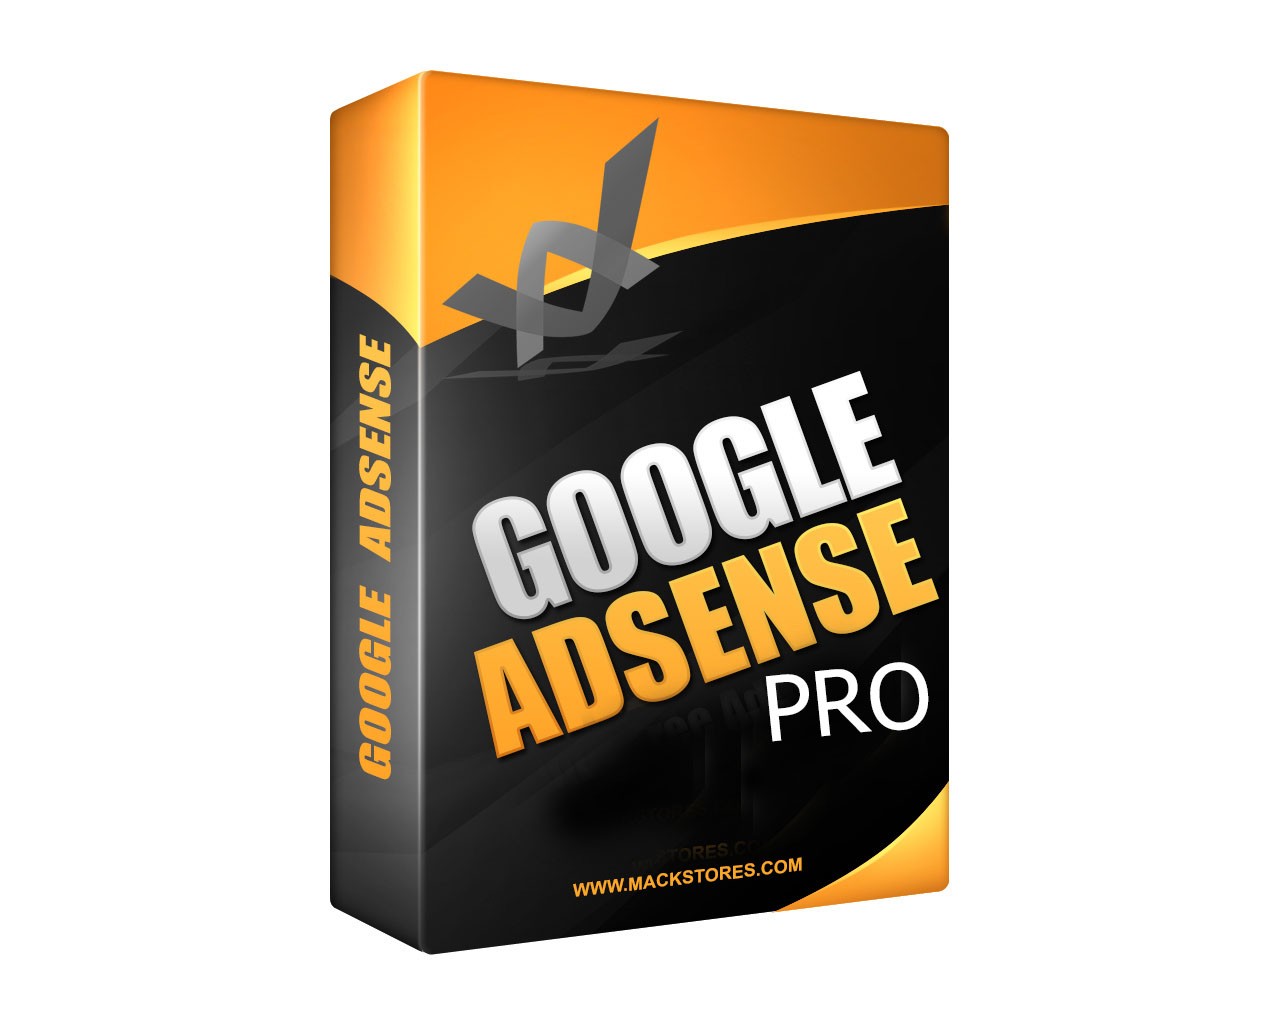 Google Adsense Pro